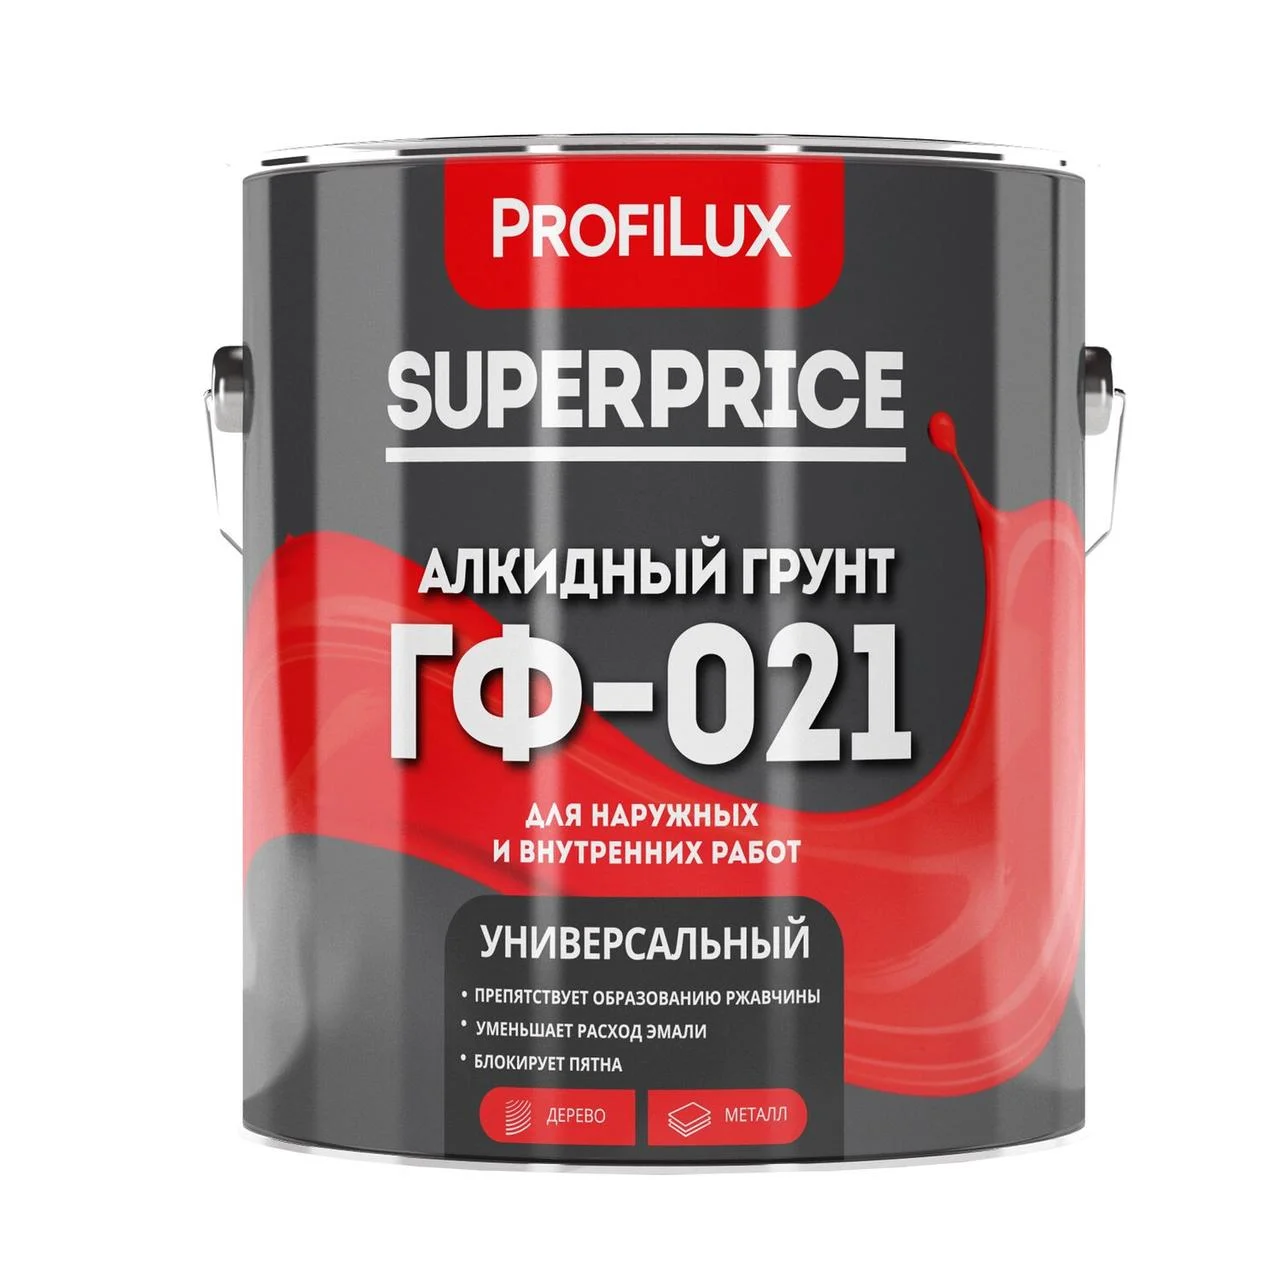 Алкидный грунт ГФ-021 PROFILUX SUPER PRICE серый 3 кг